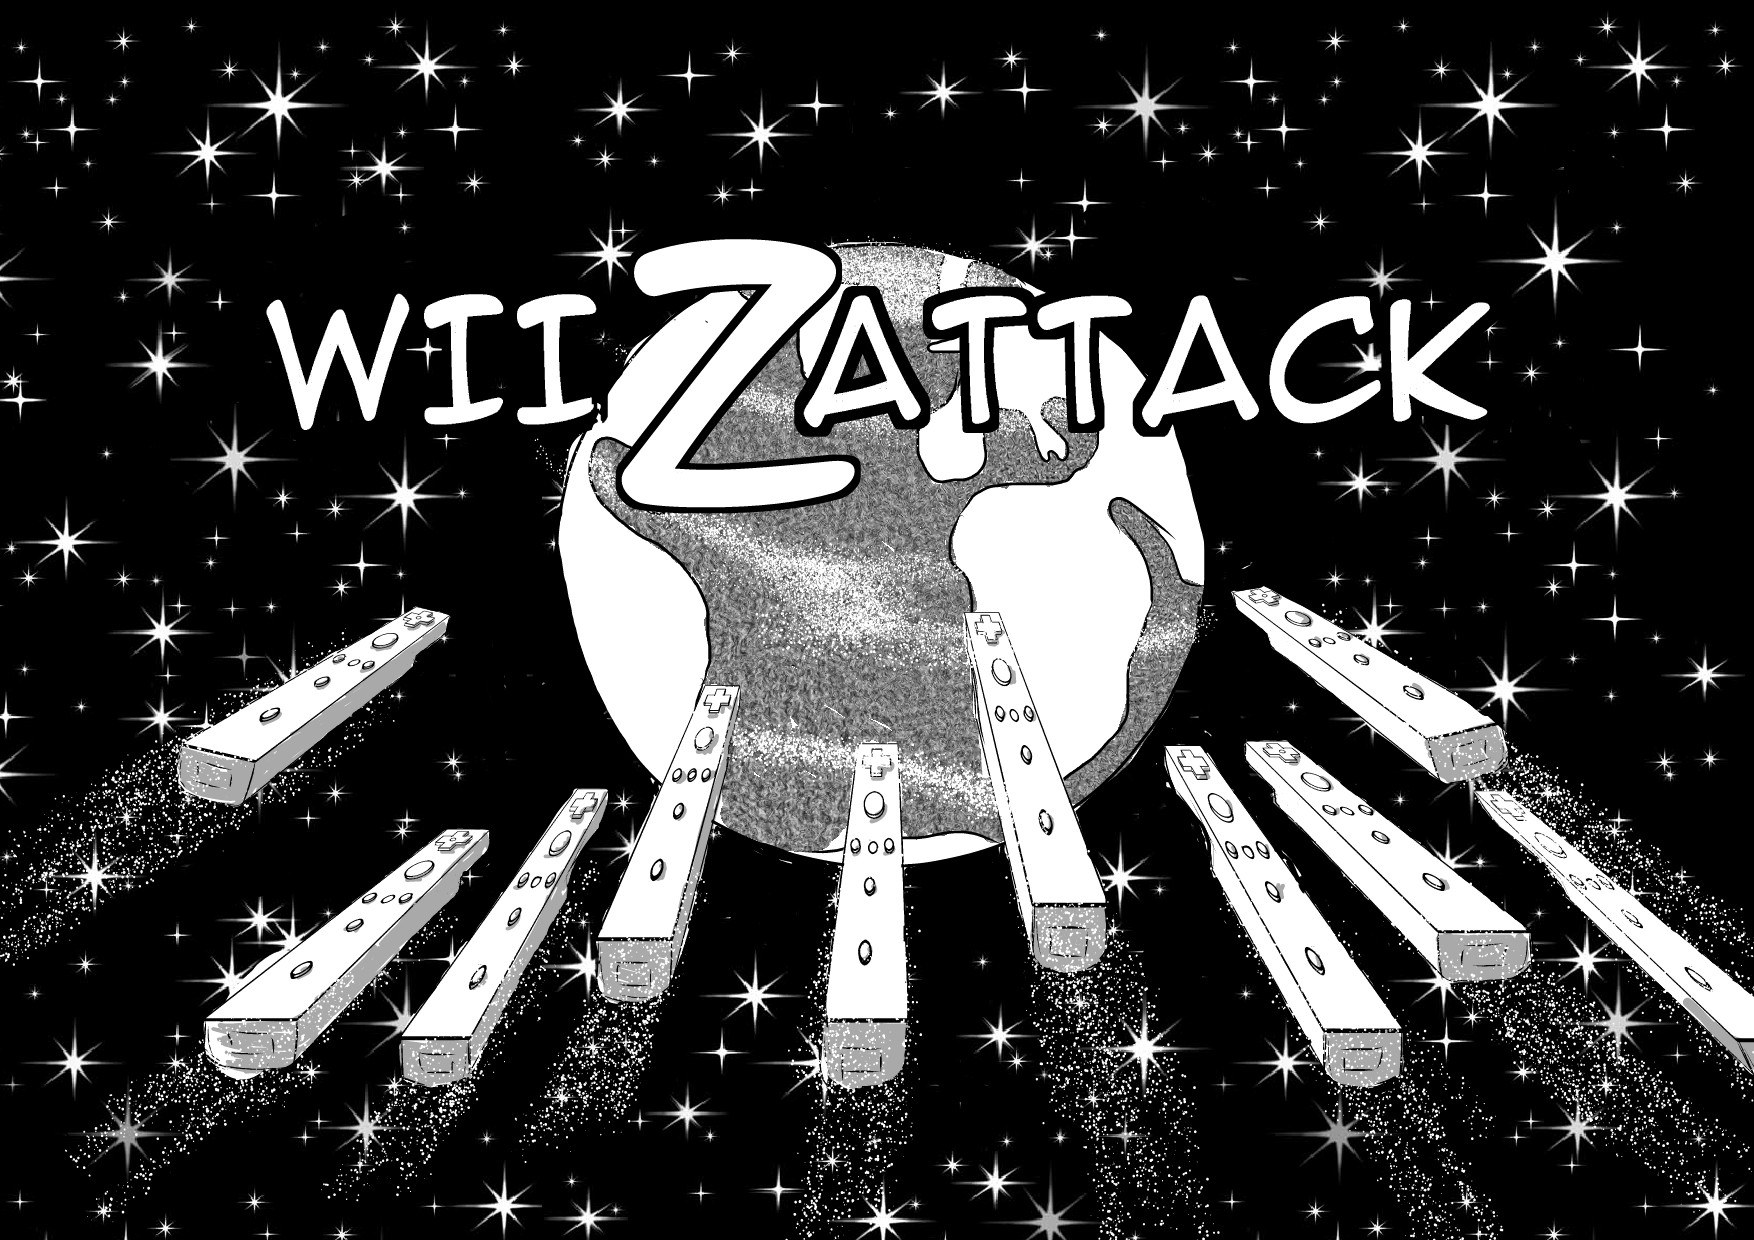 Wii Zattack